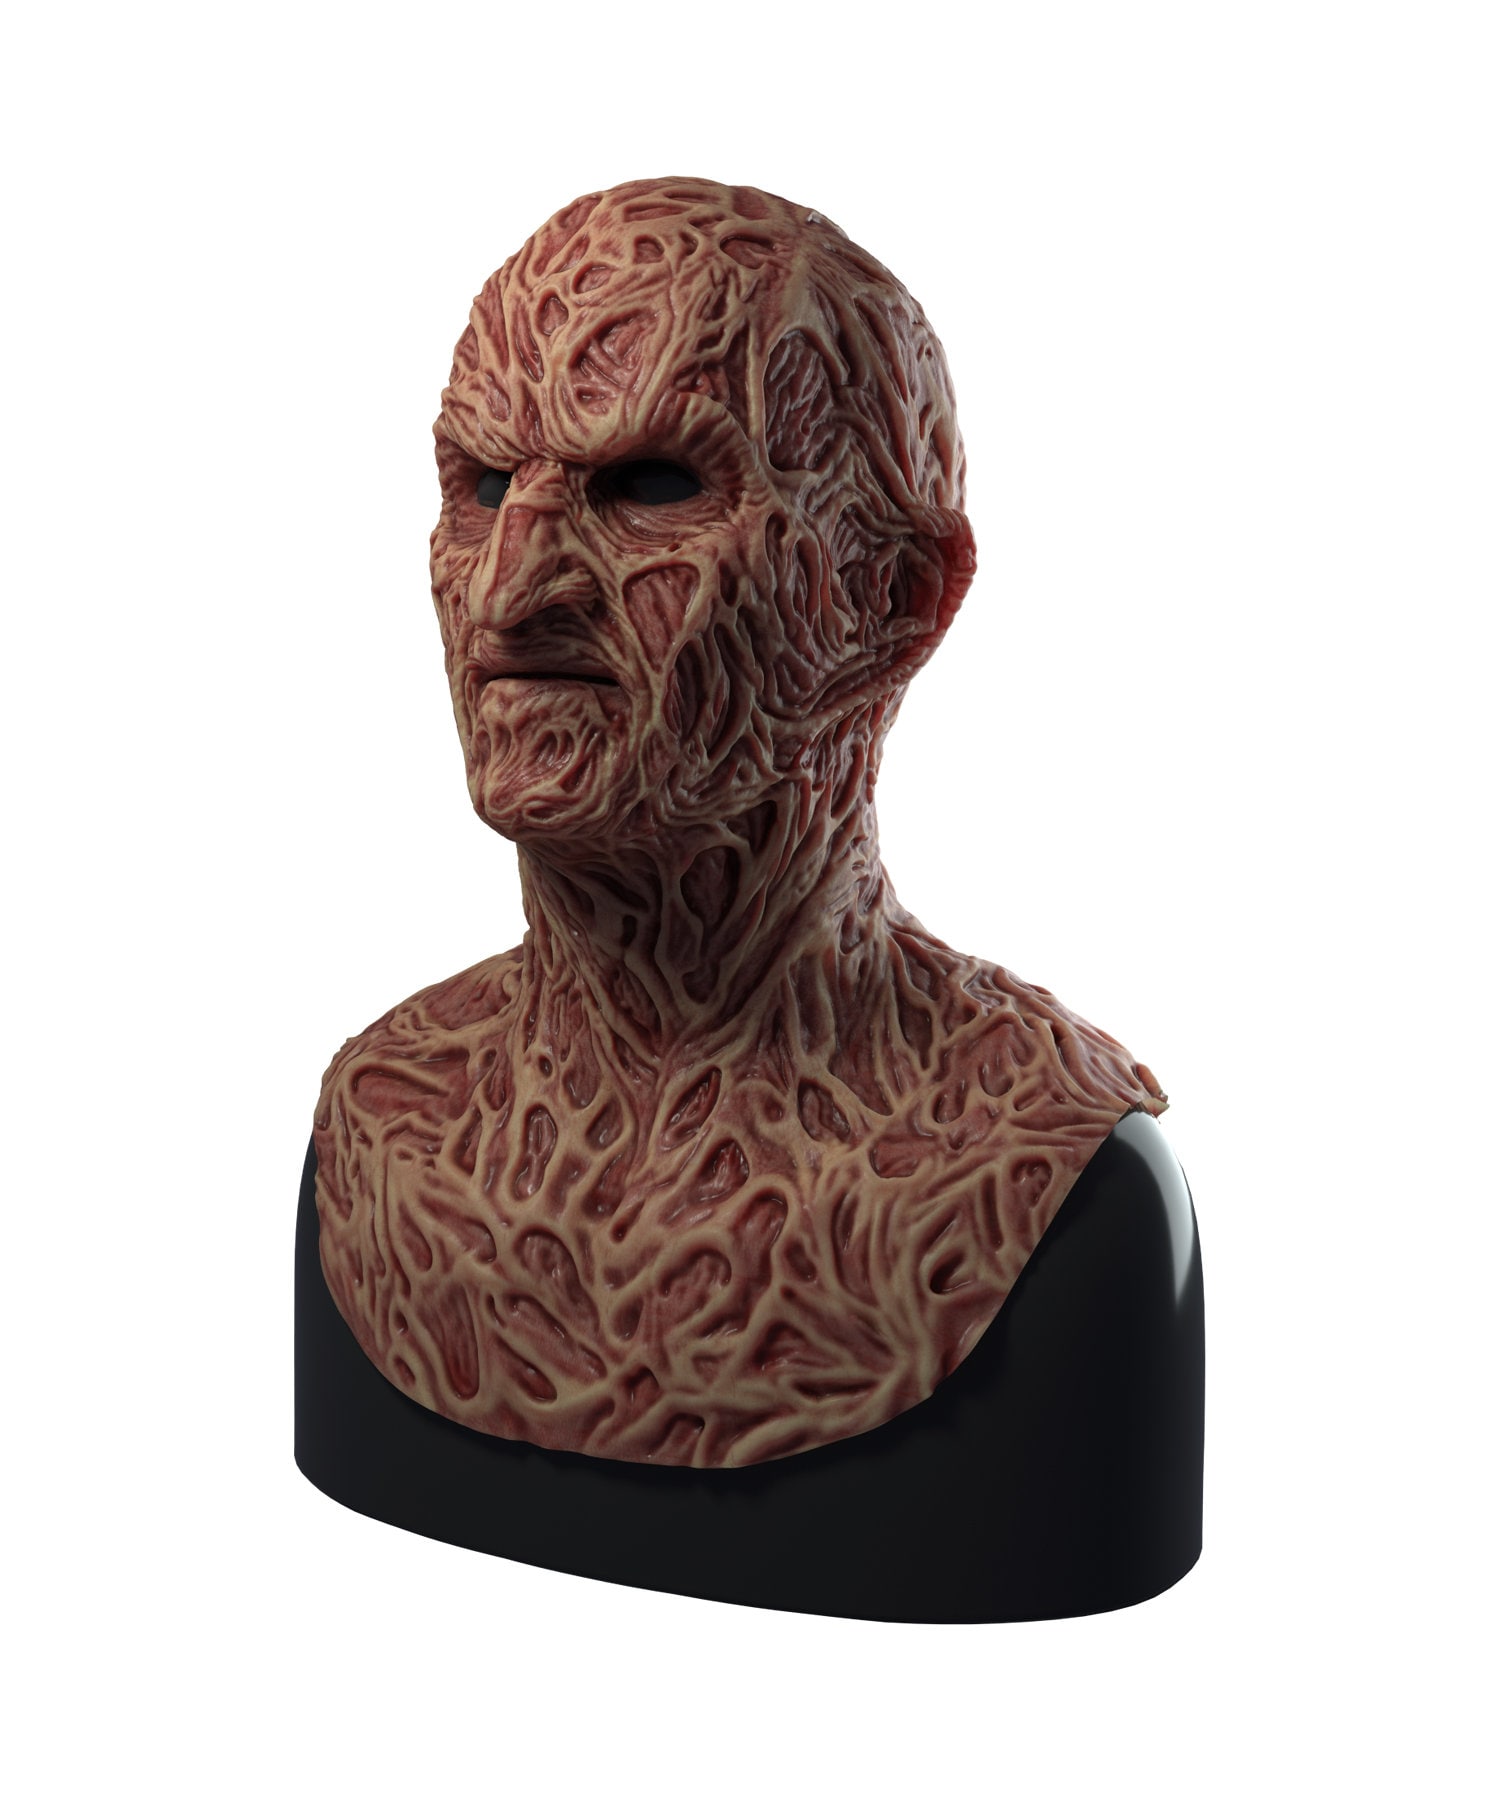 Freddy Krueger Part 4 Hyper Realistic spfx Silicone Mask Nightmare Halloween 